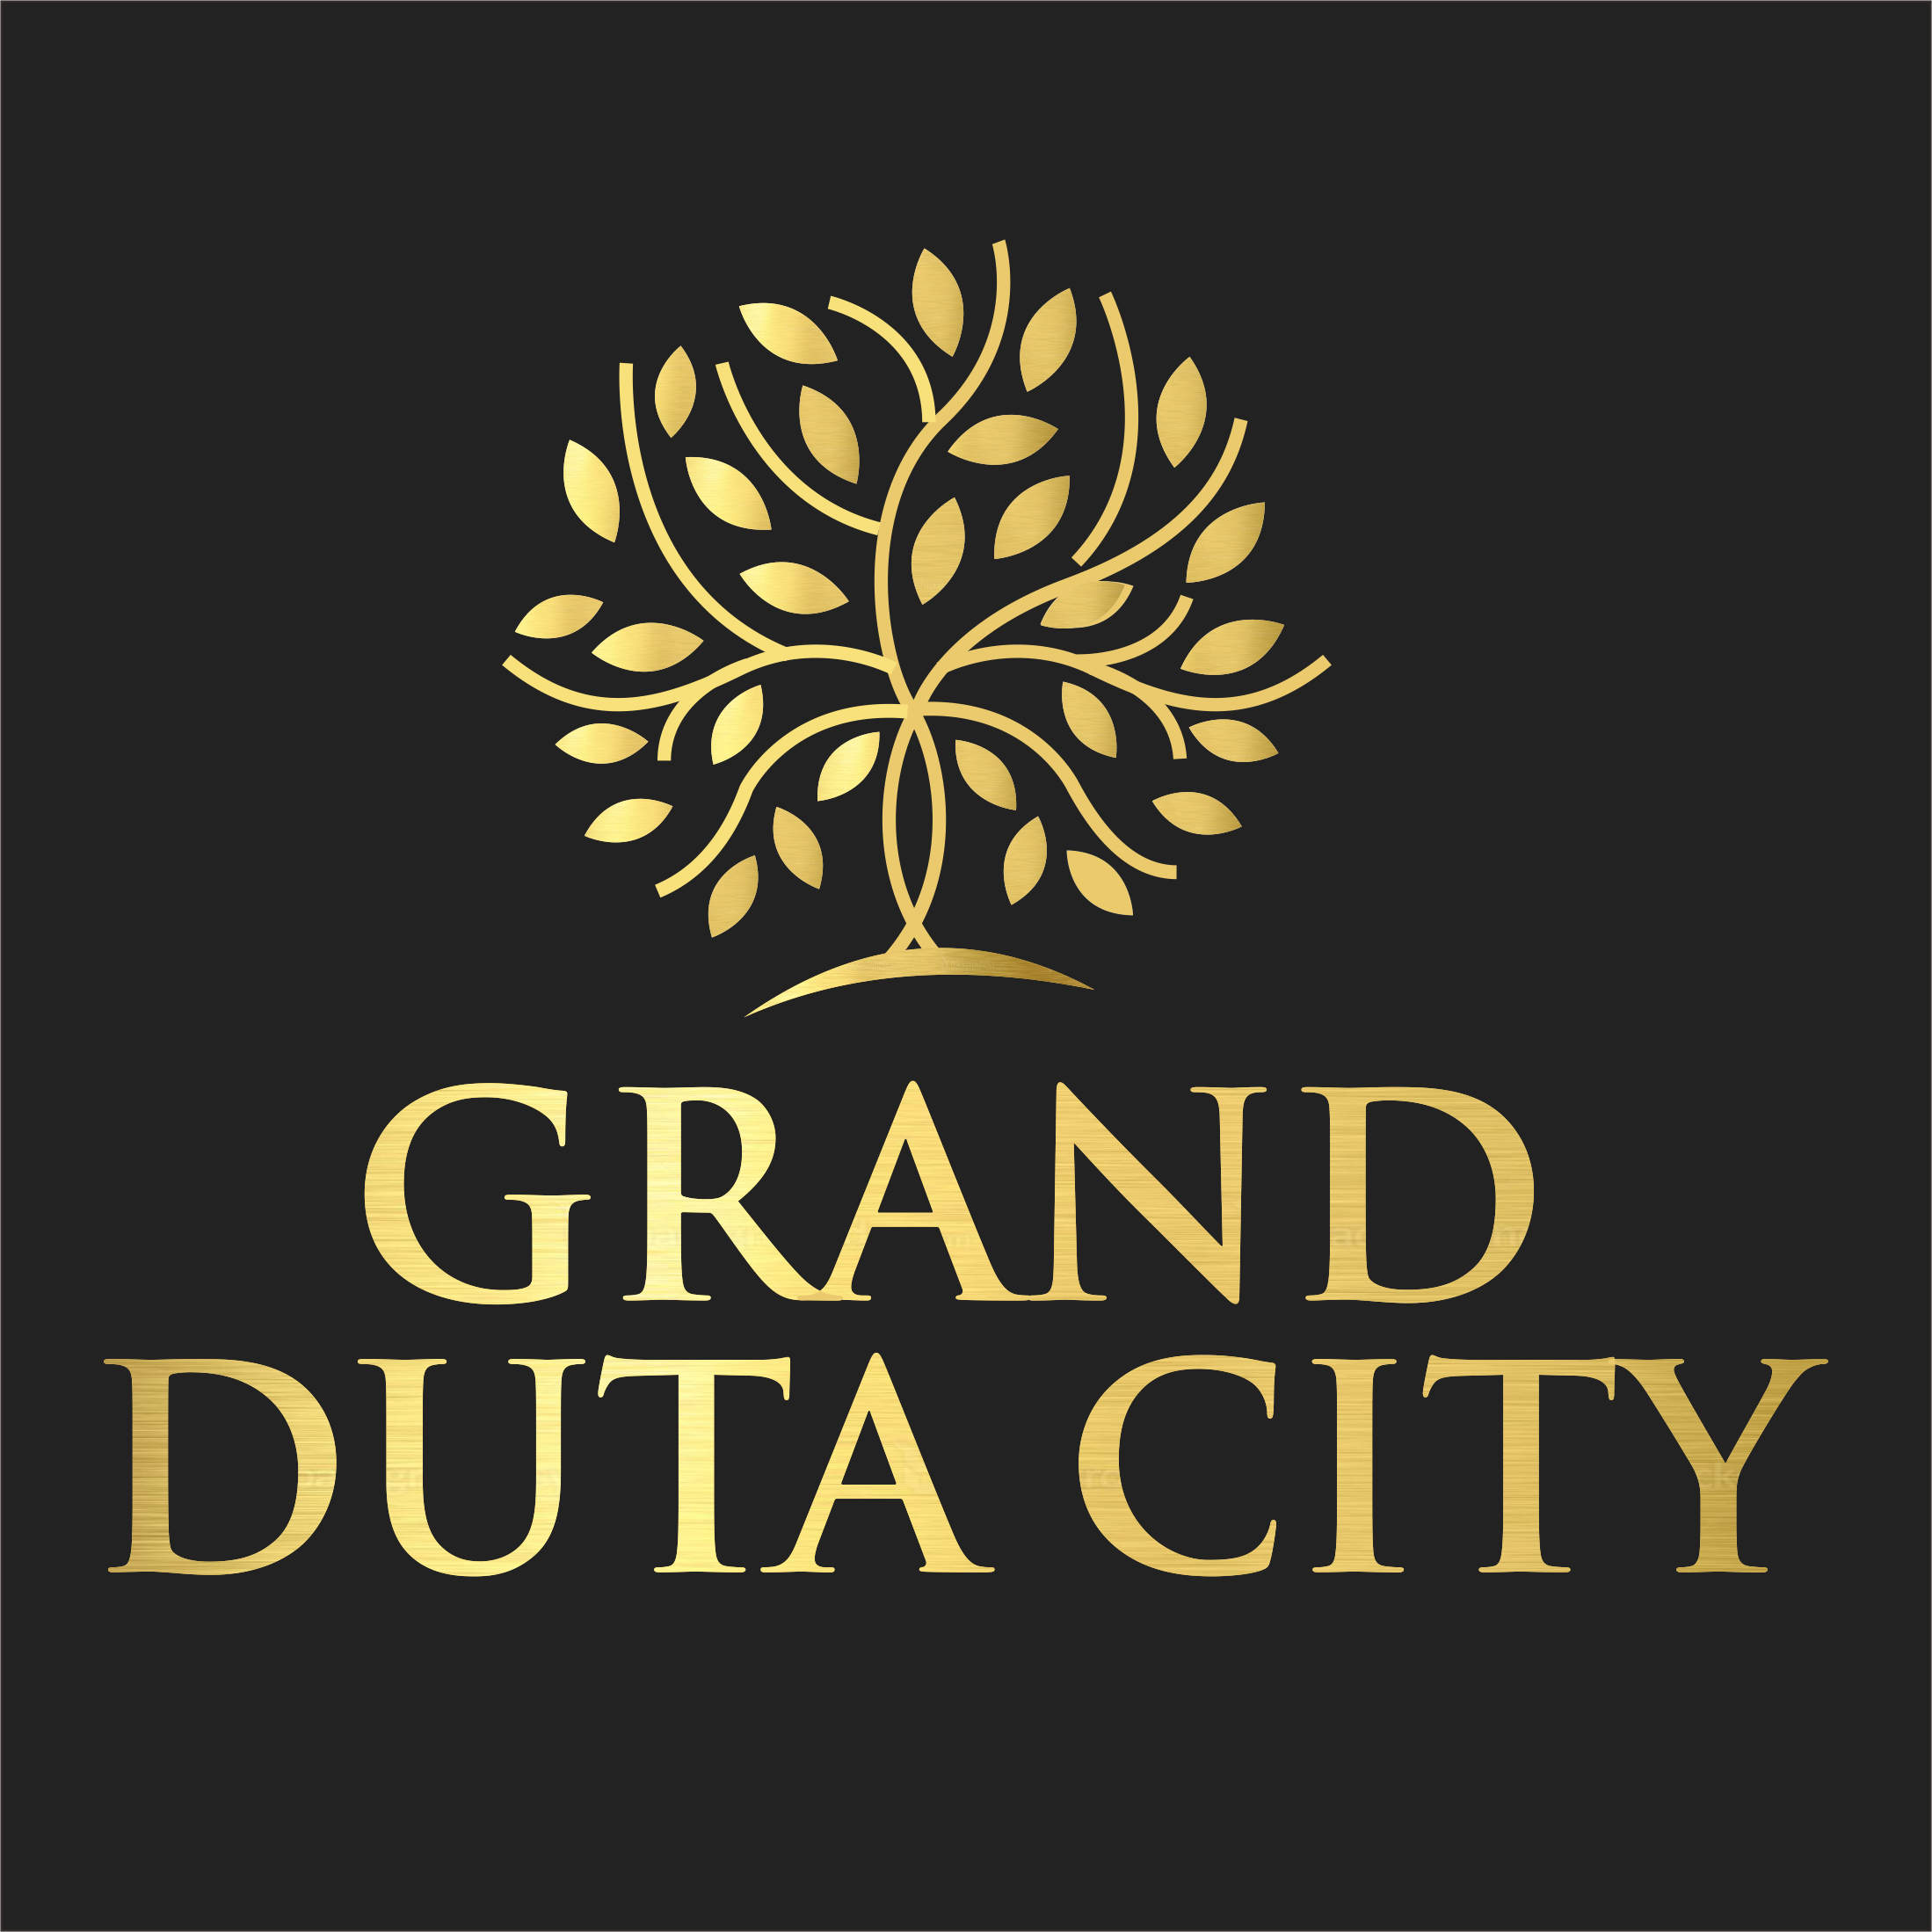 Grand duta city